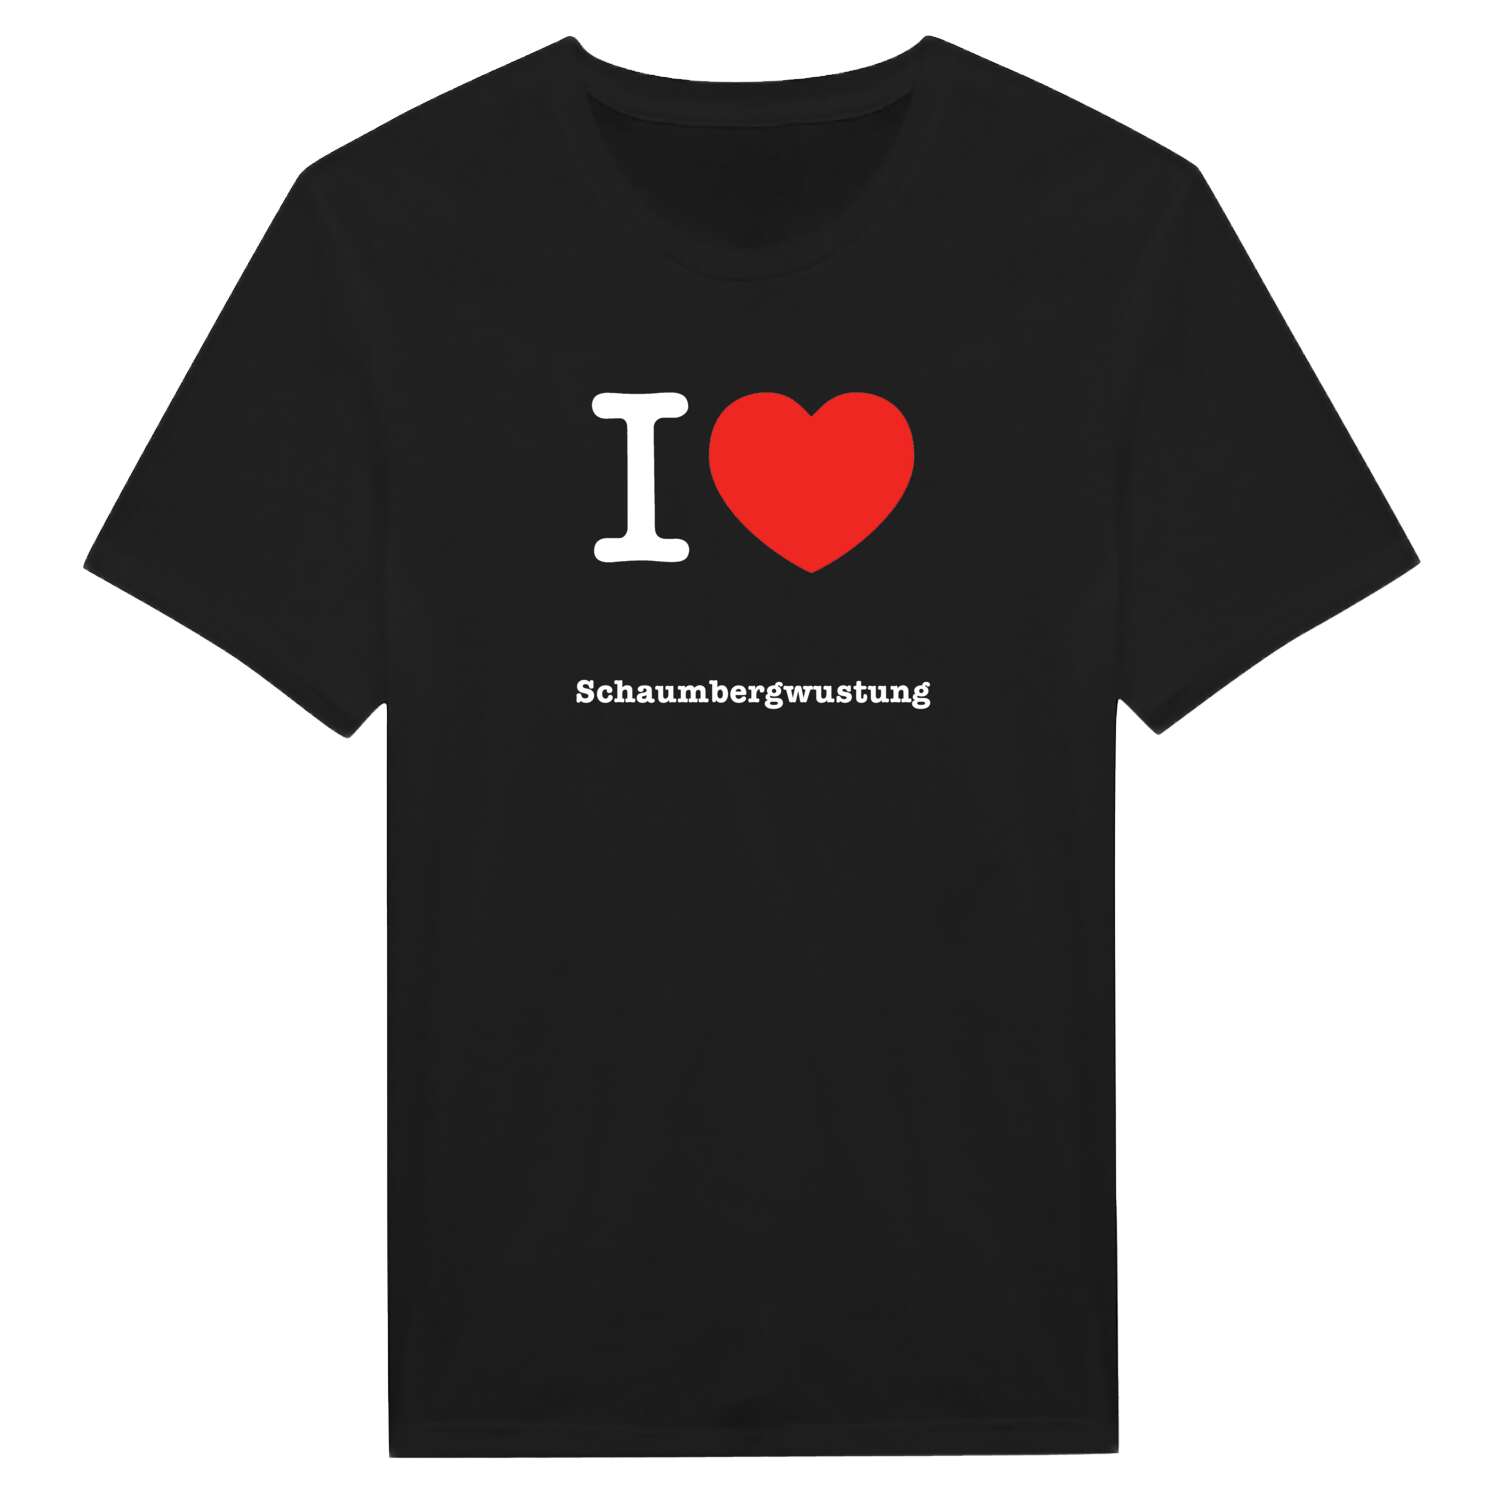 Schaumbergwustung T-Shirt »I love«